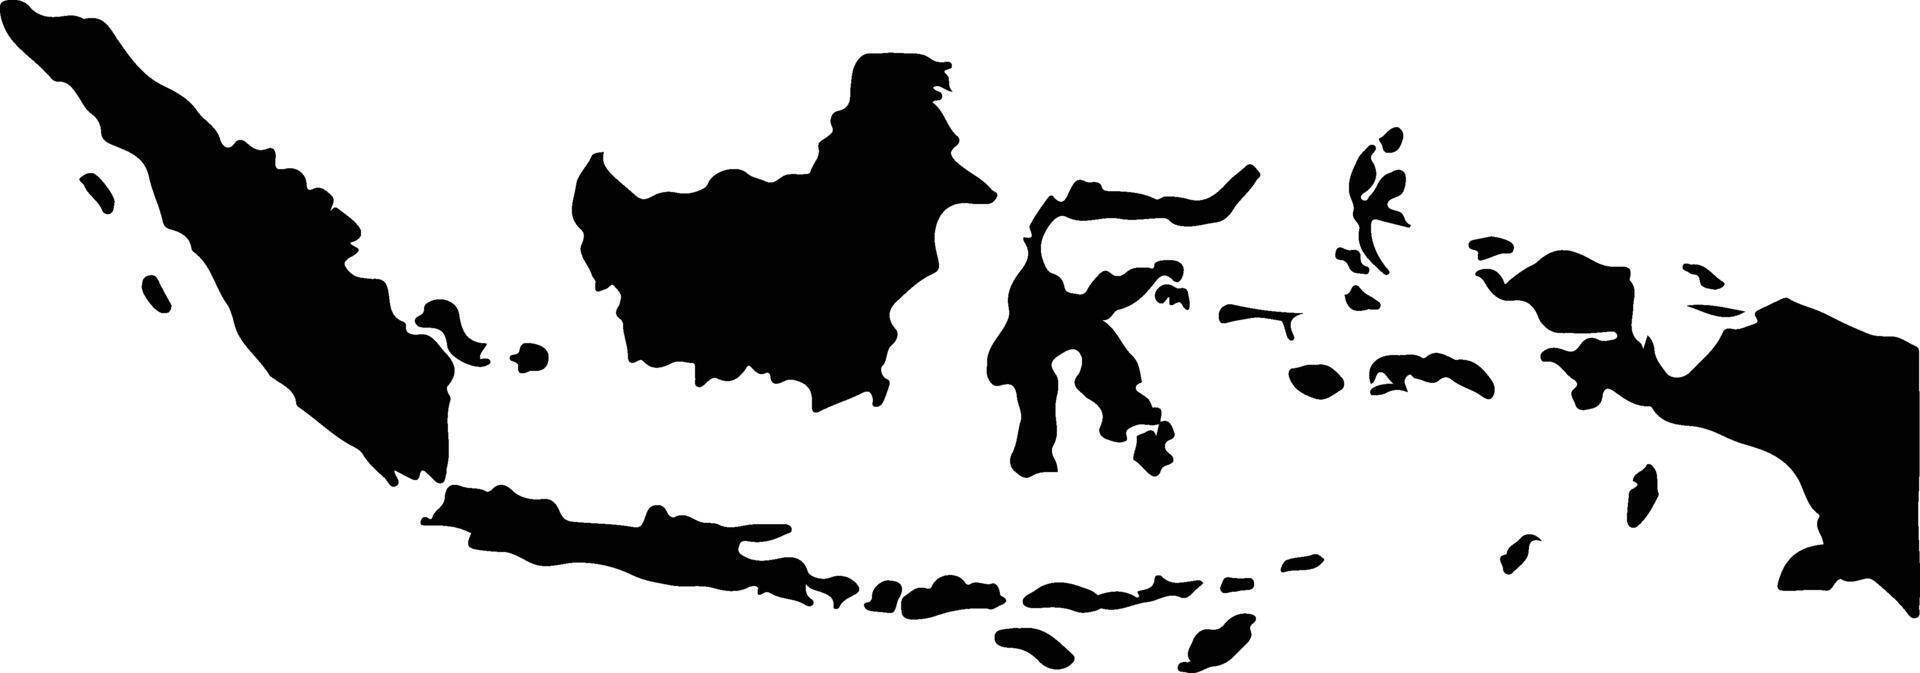 Indonésia silhueta mapa vetor